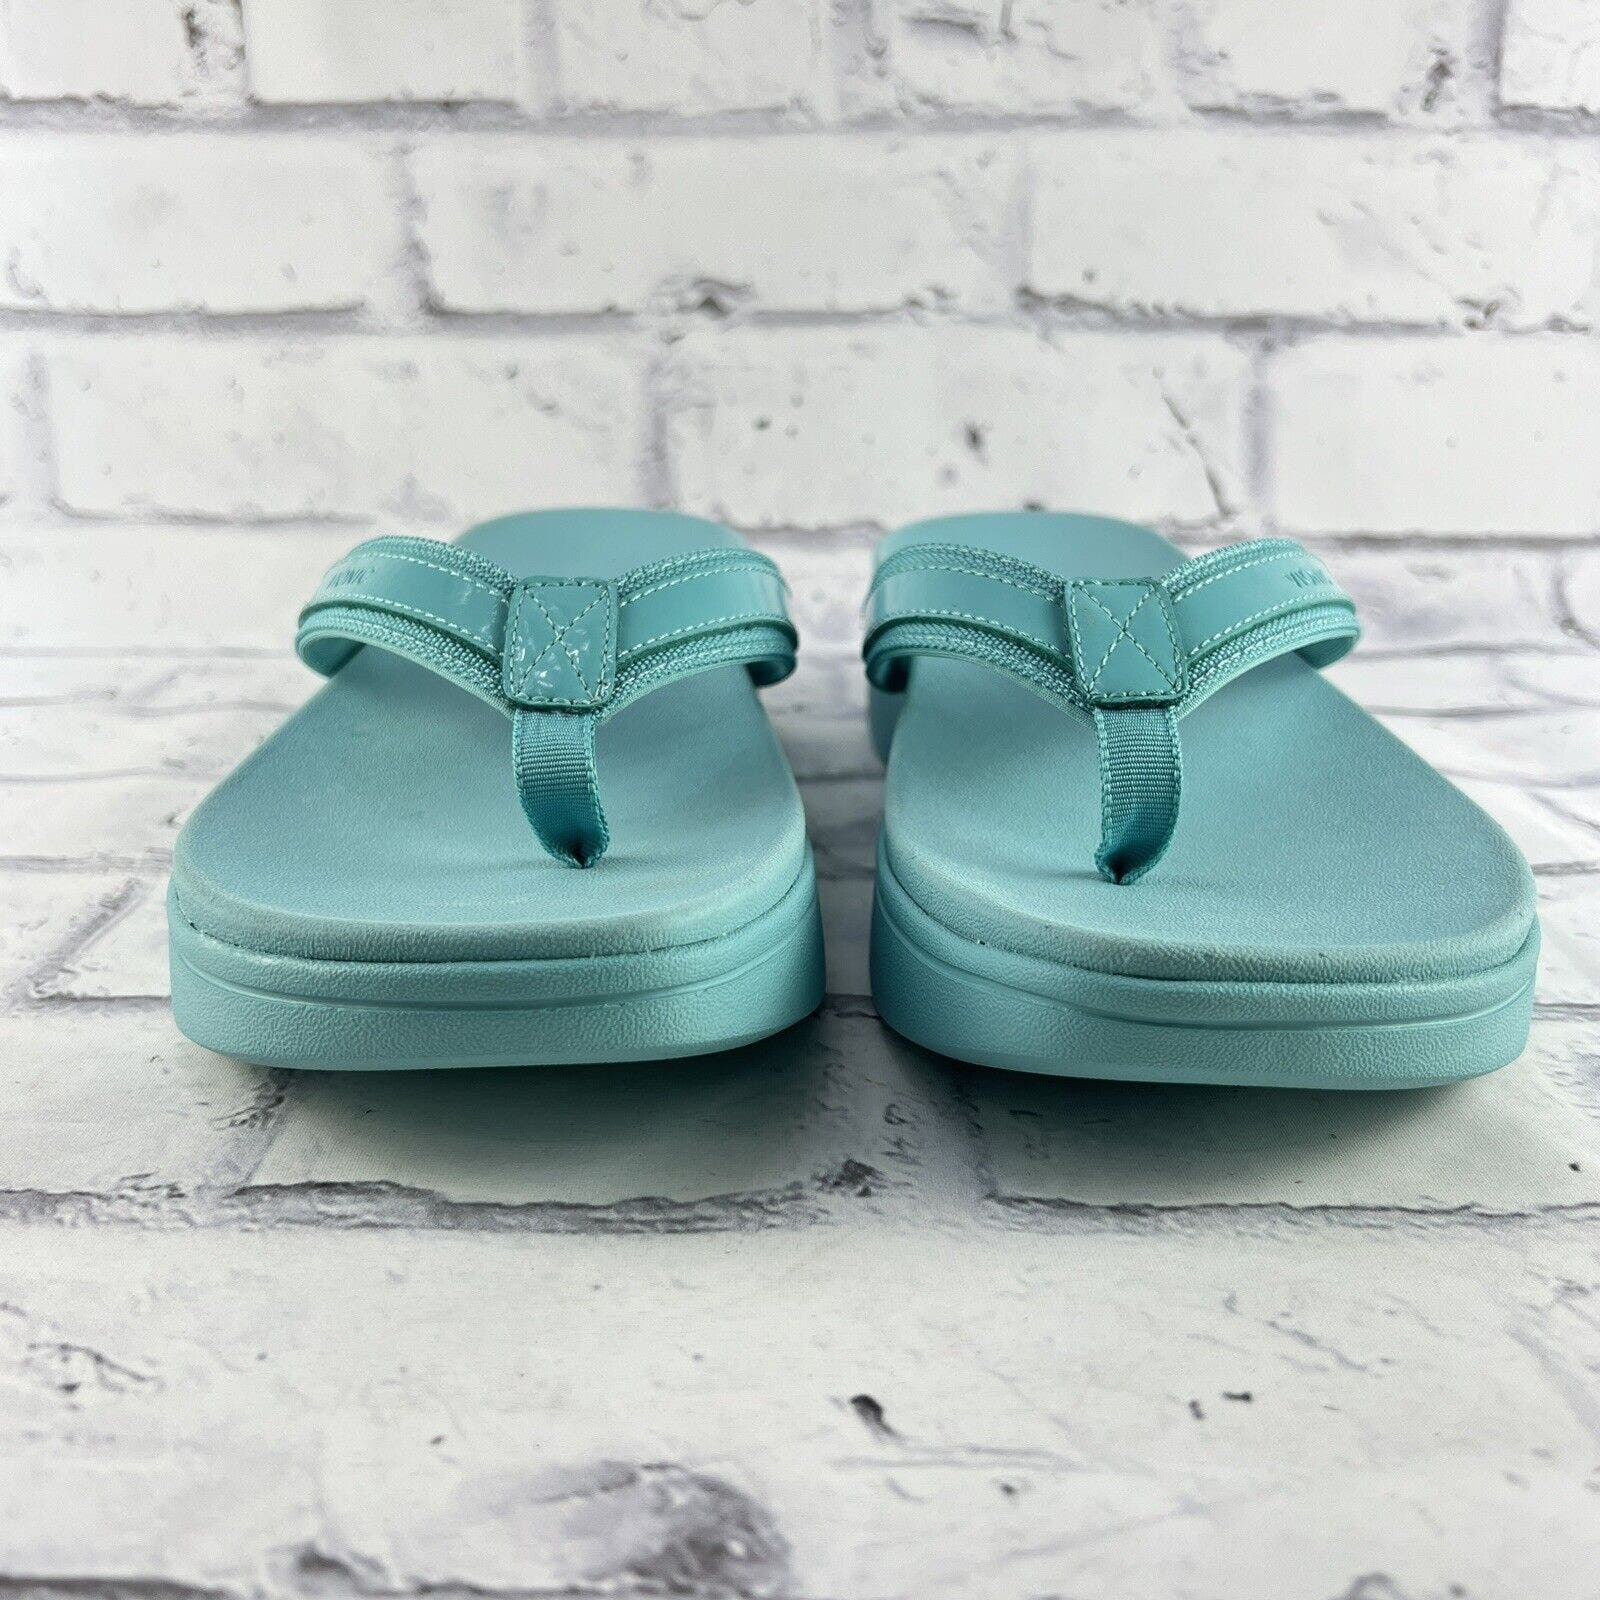 Vionic High Tide ll Platform Sandals Women’s 11 Wide Blue Casual Flip Flop